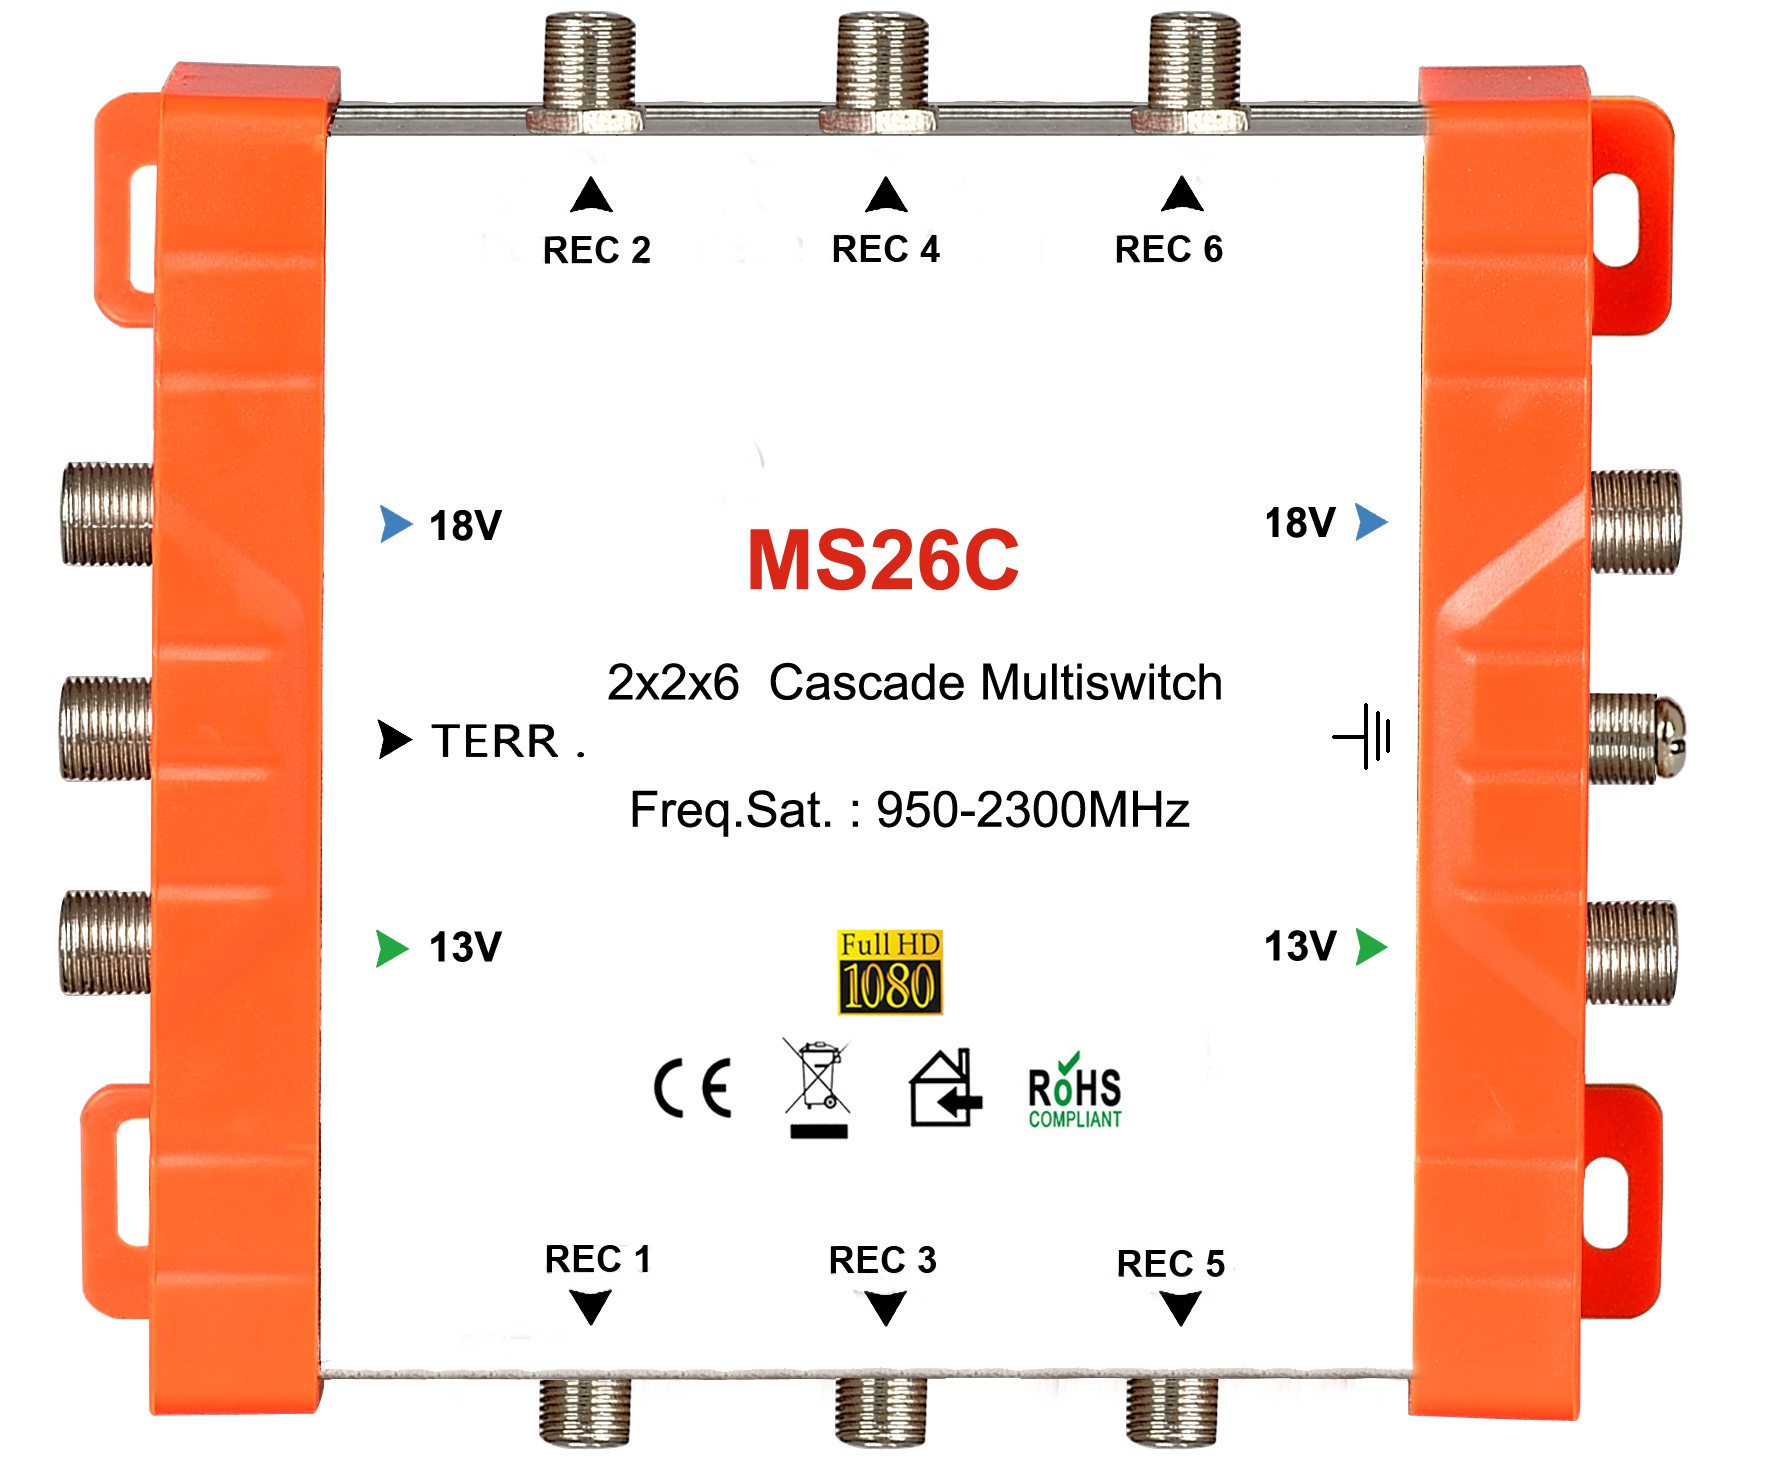 2x6 satellite multi-switch, Cascade multiswitch